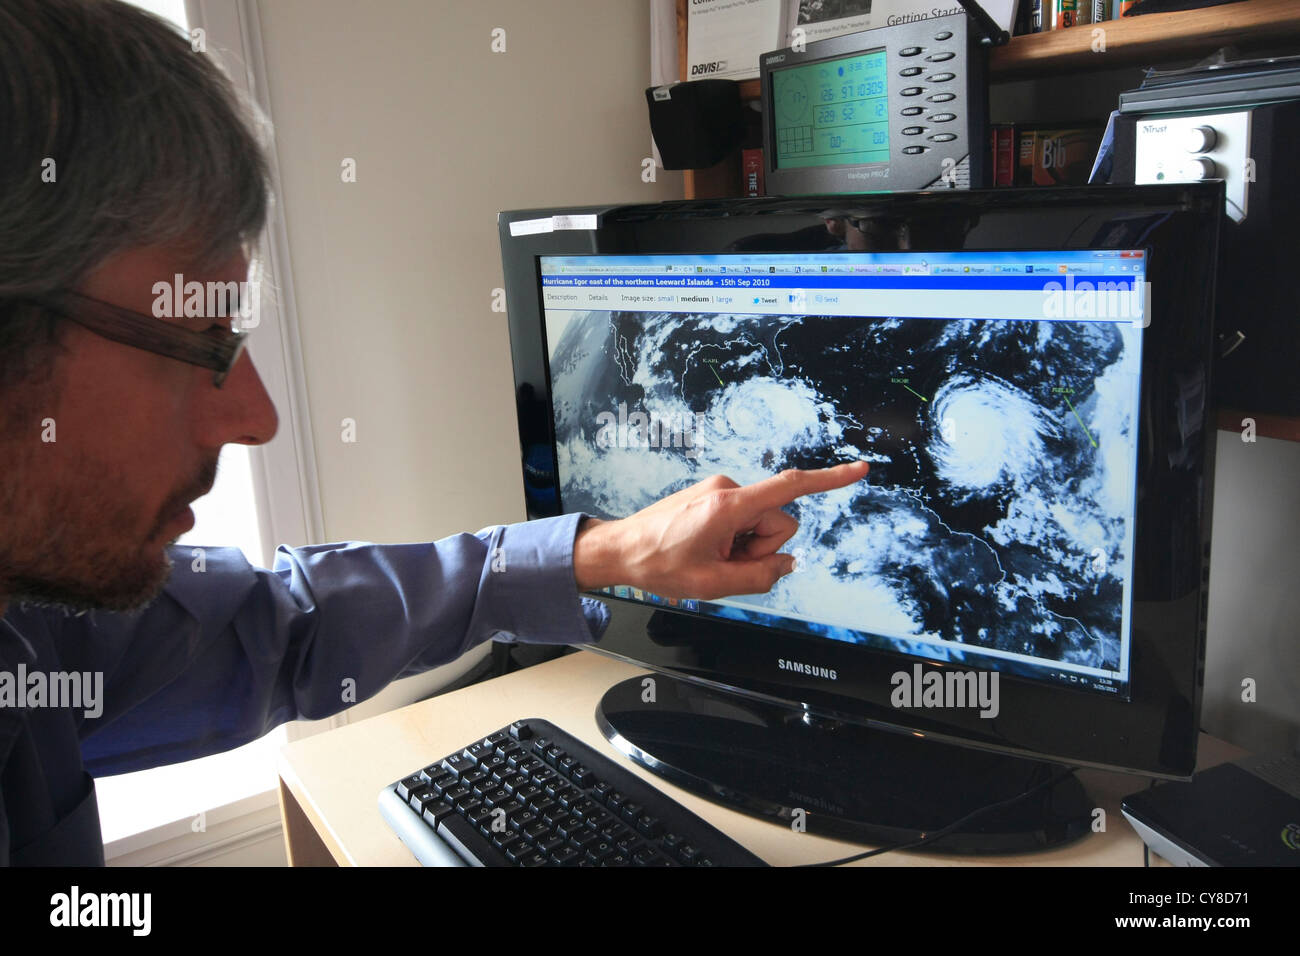 Meteorologist at work Stock Photo, Royalty Free Image: 51202453 - Alamy1300 x 956